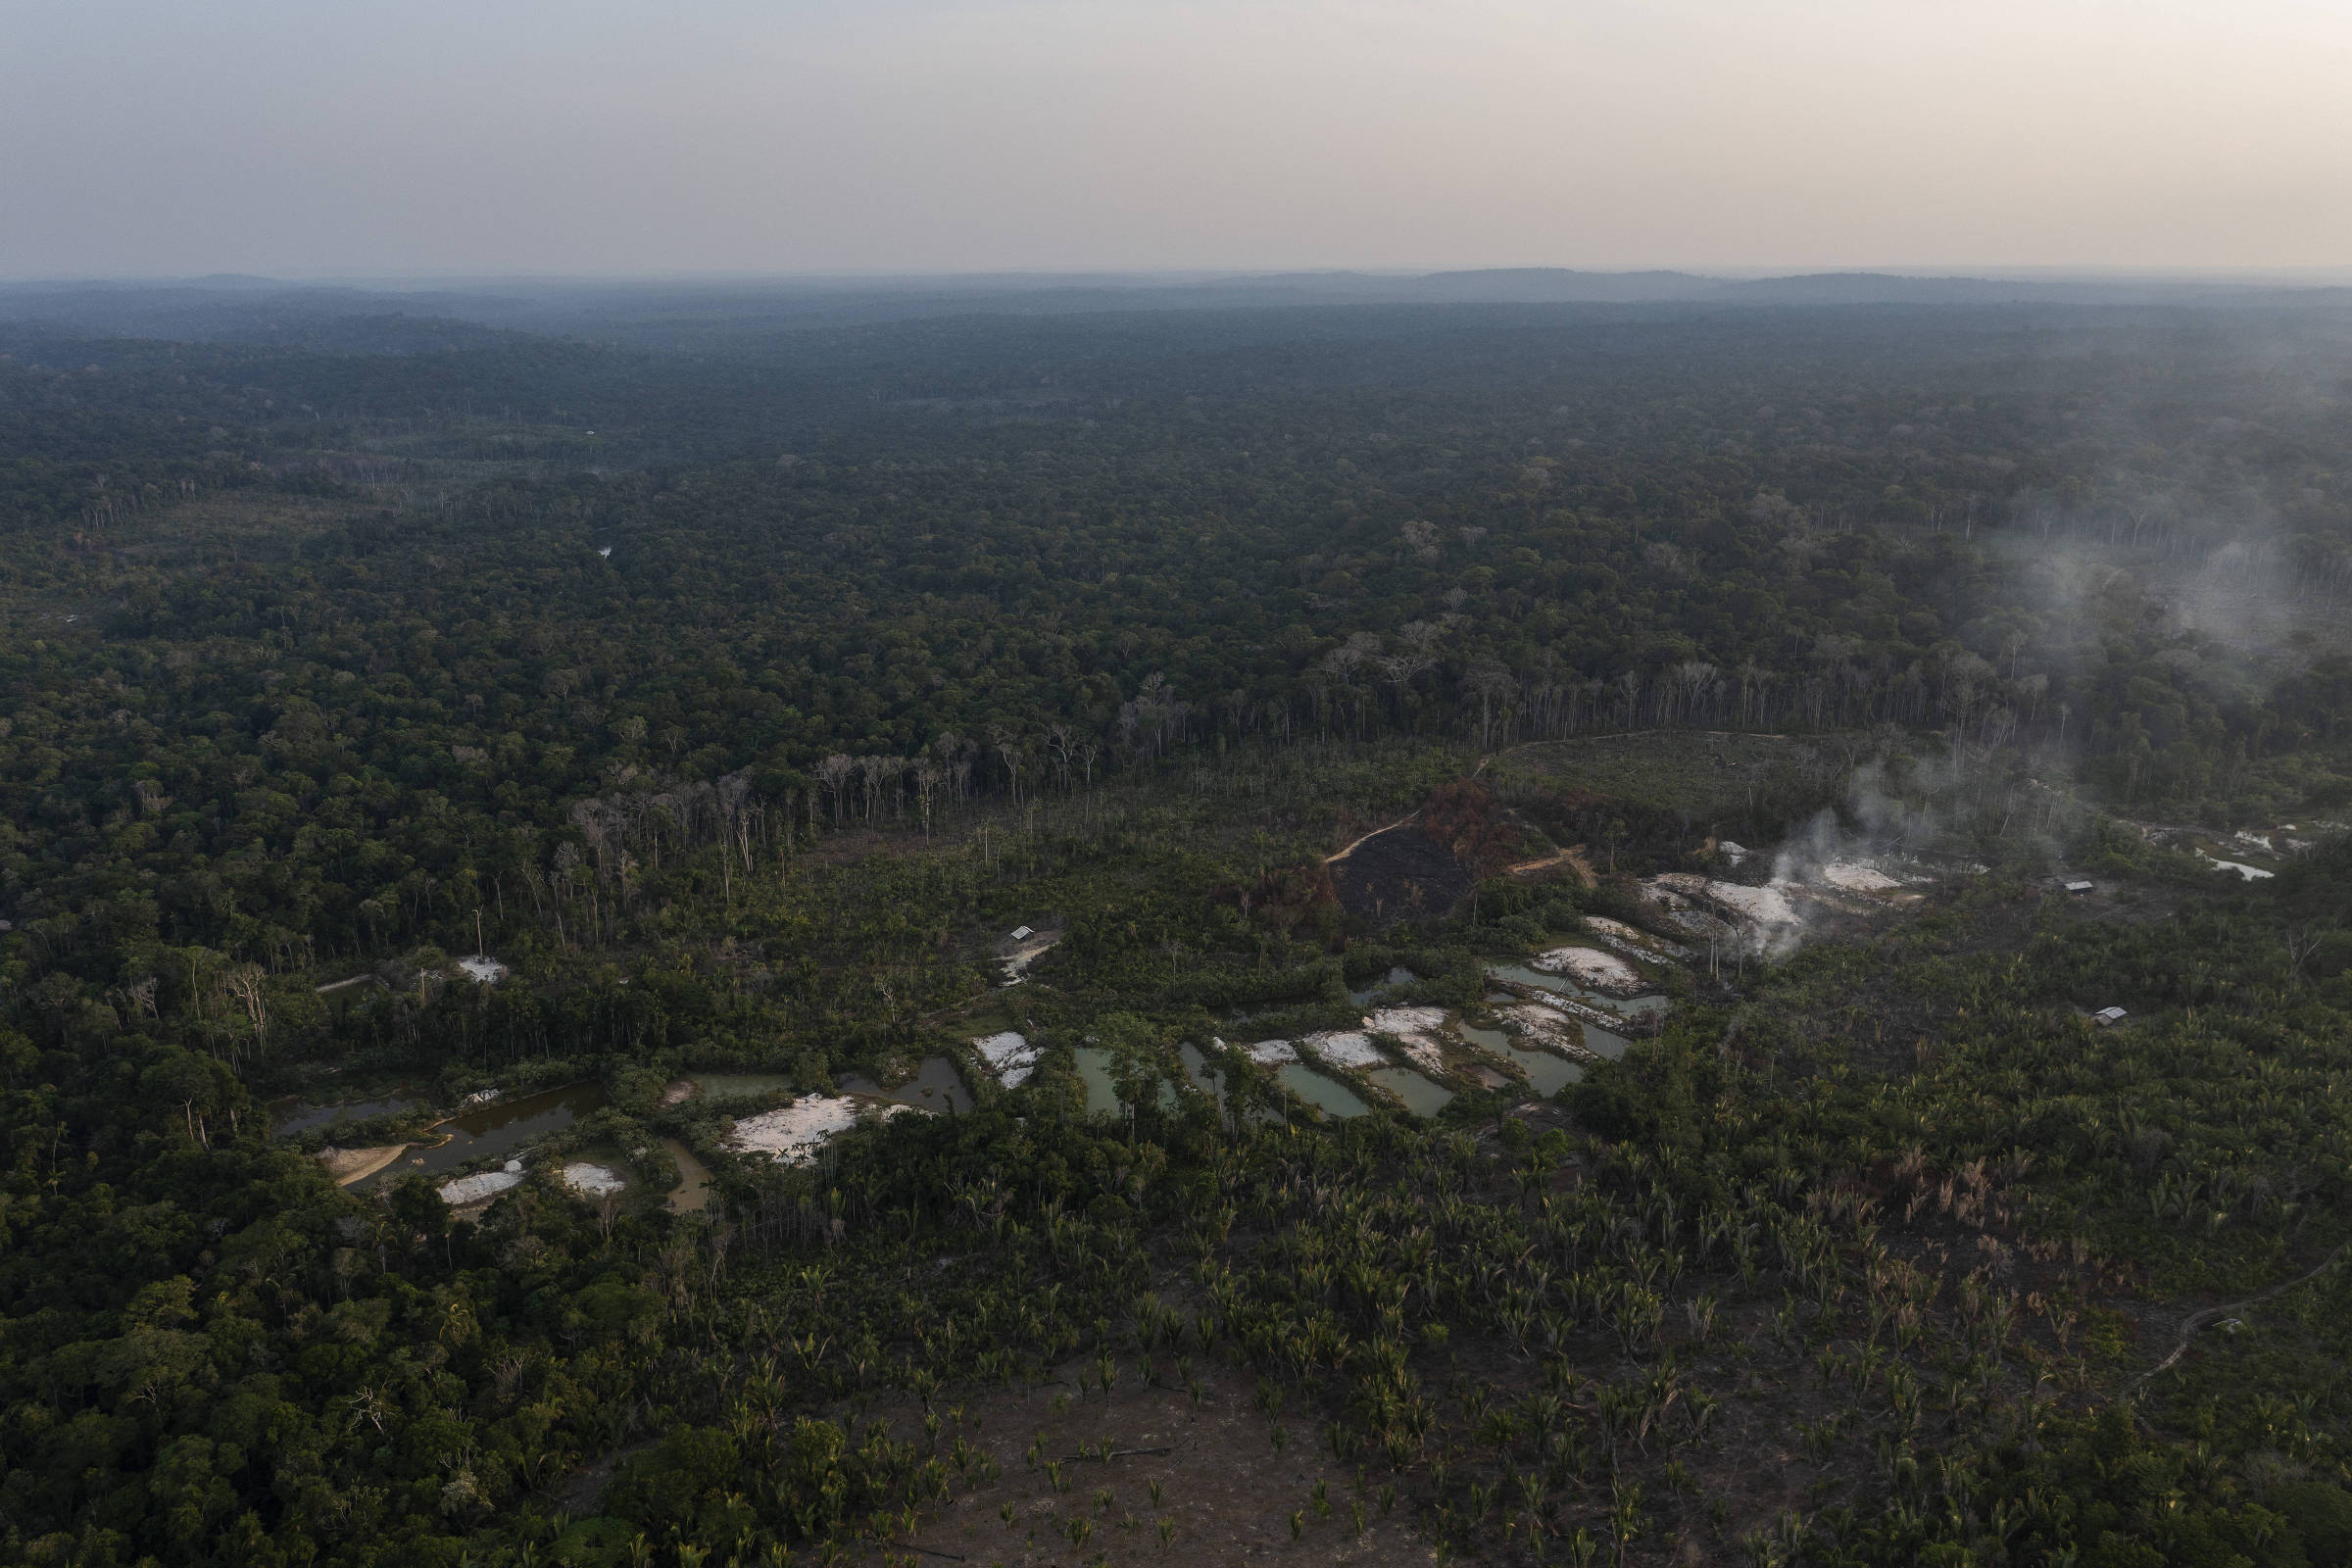 Vista de drone de áreas abertas para garimpo no meio da floresta